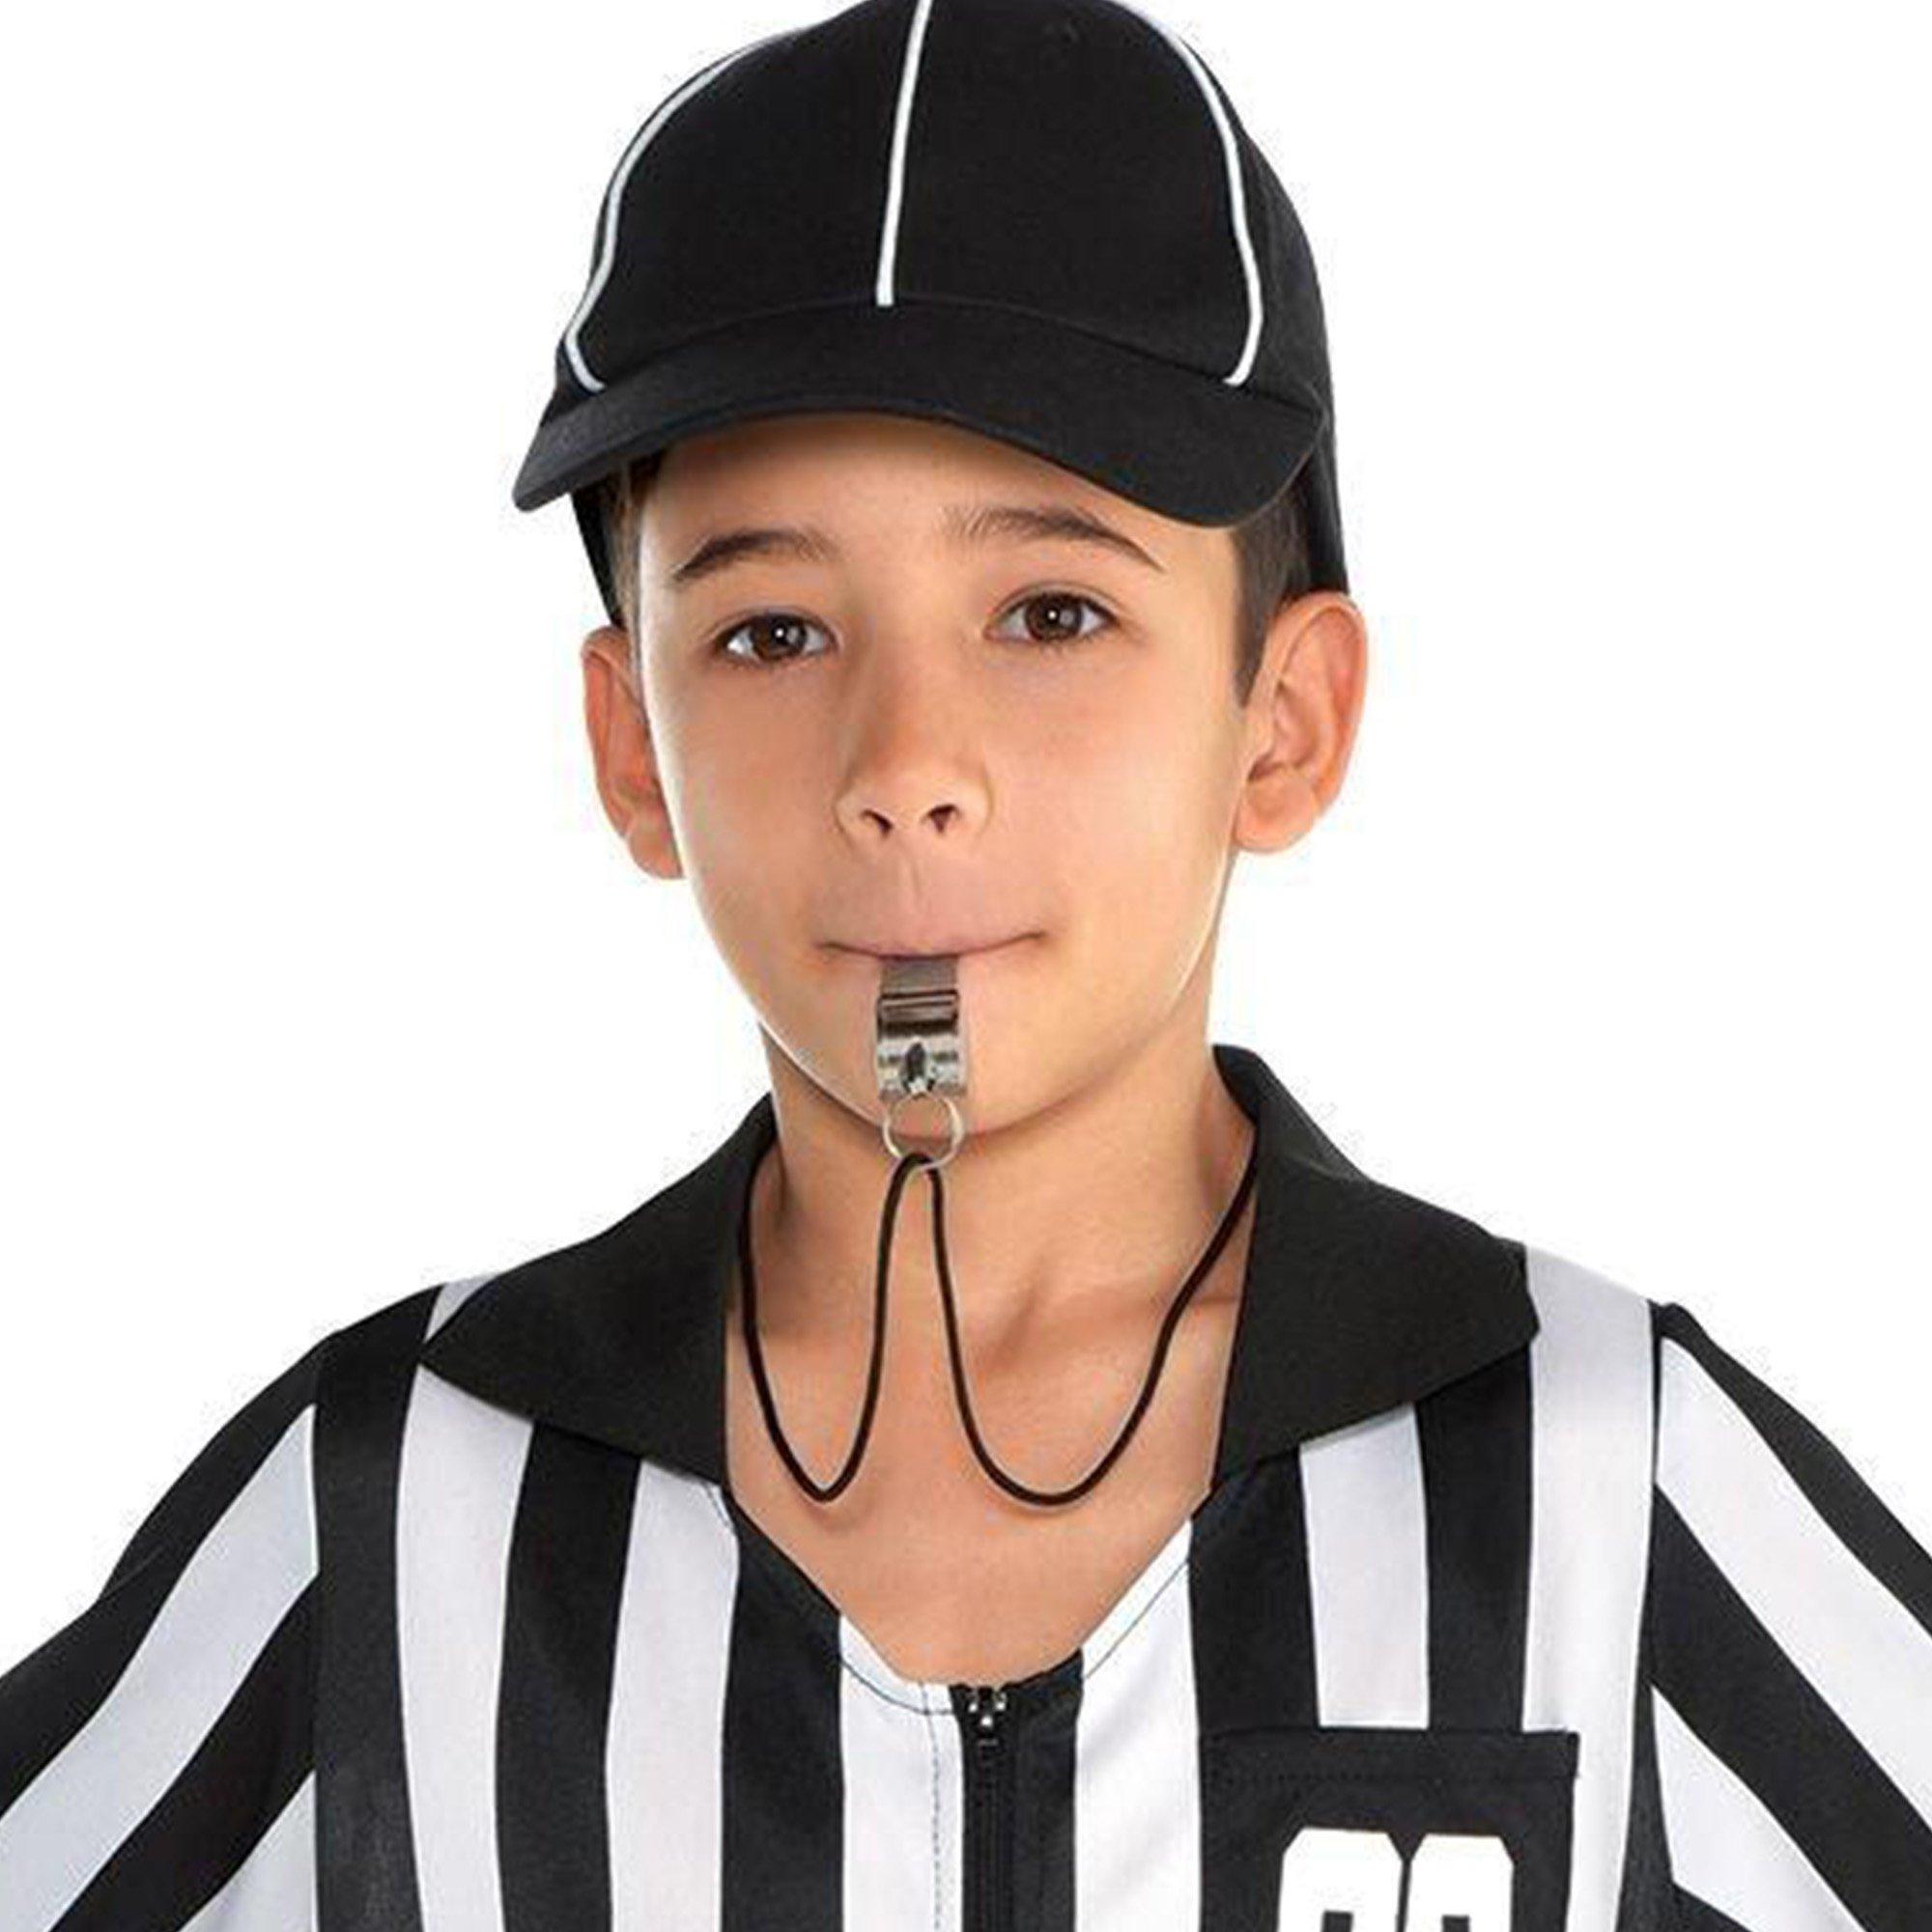 Kids' Referee Costume Accessory Kit